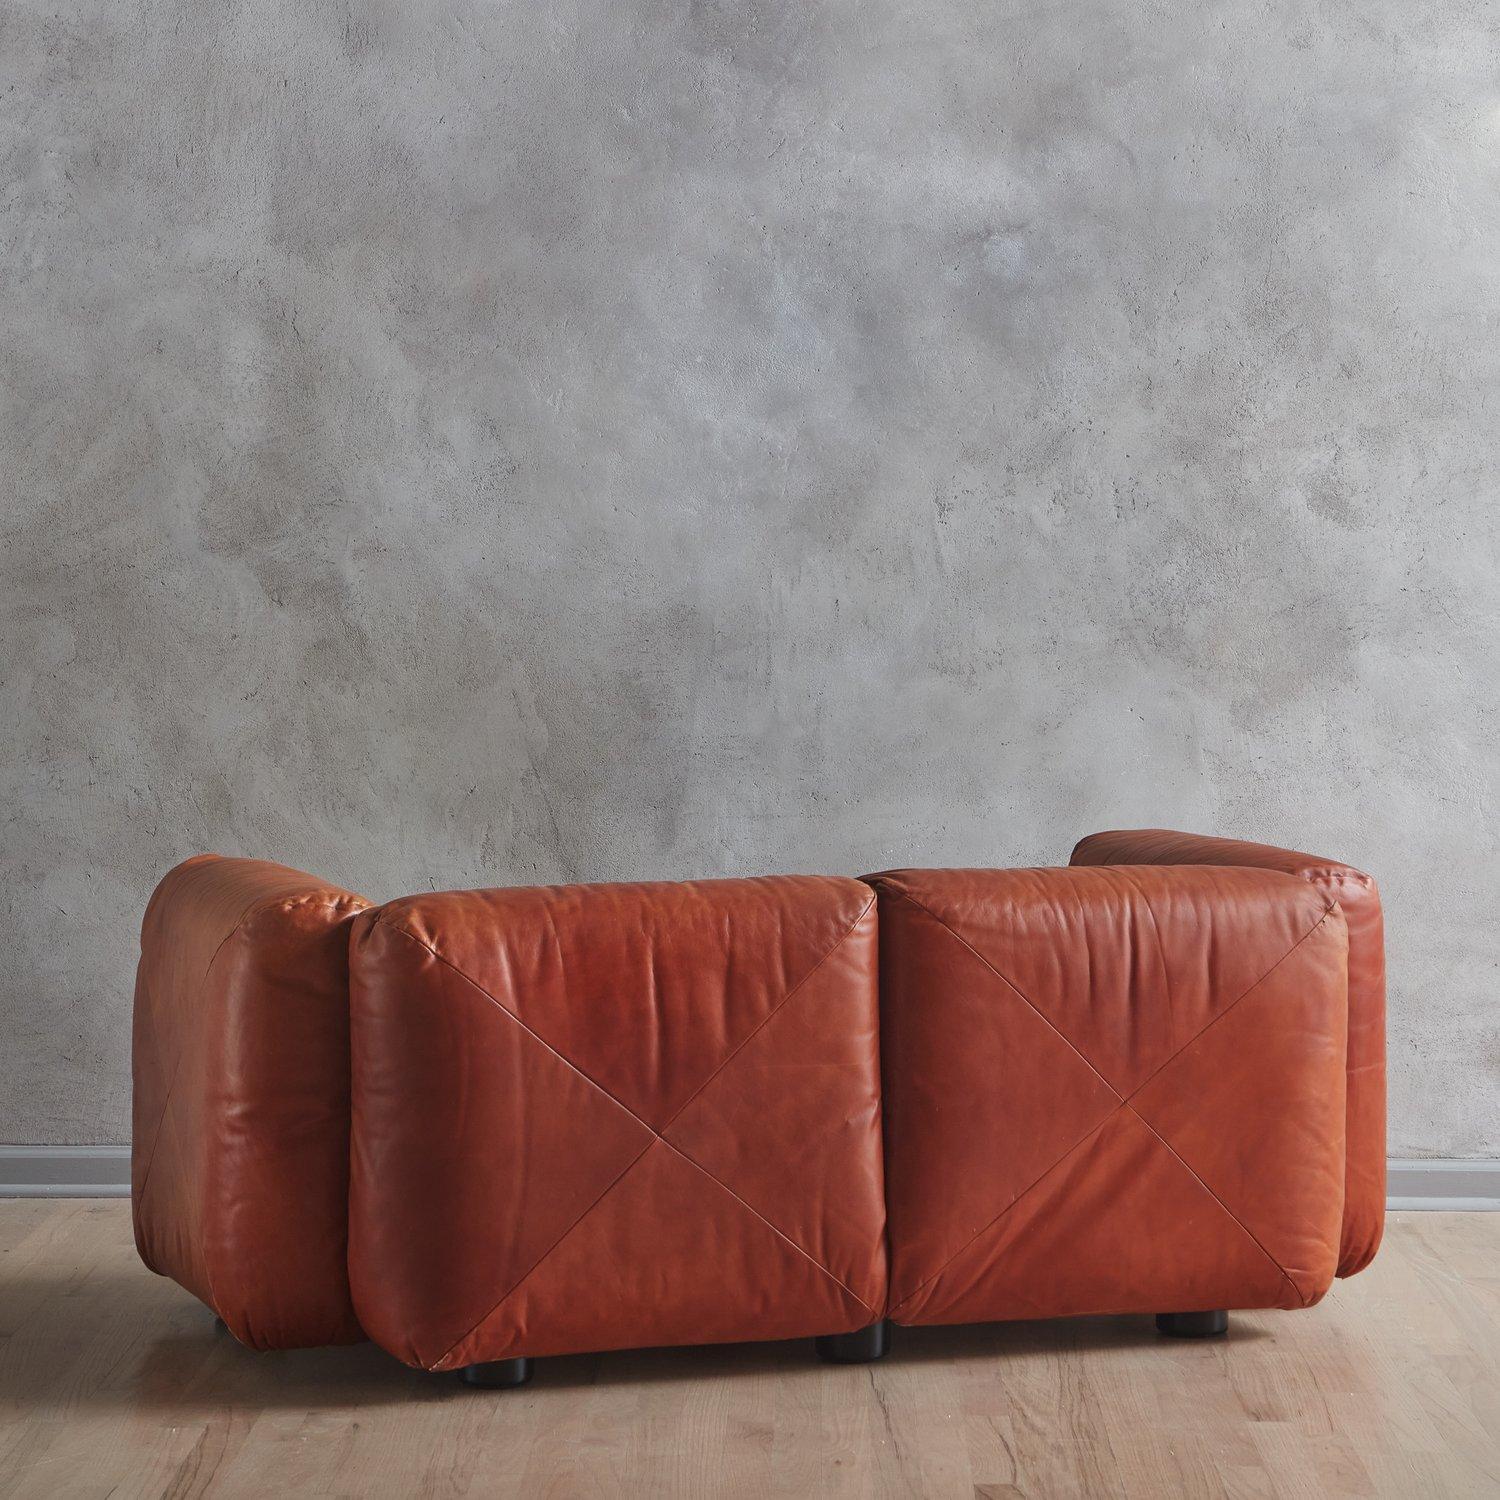 Marenco Sofa in Original Cognac Leather by Mario Marenco for Arflex, Italy 1970s For Sale 2